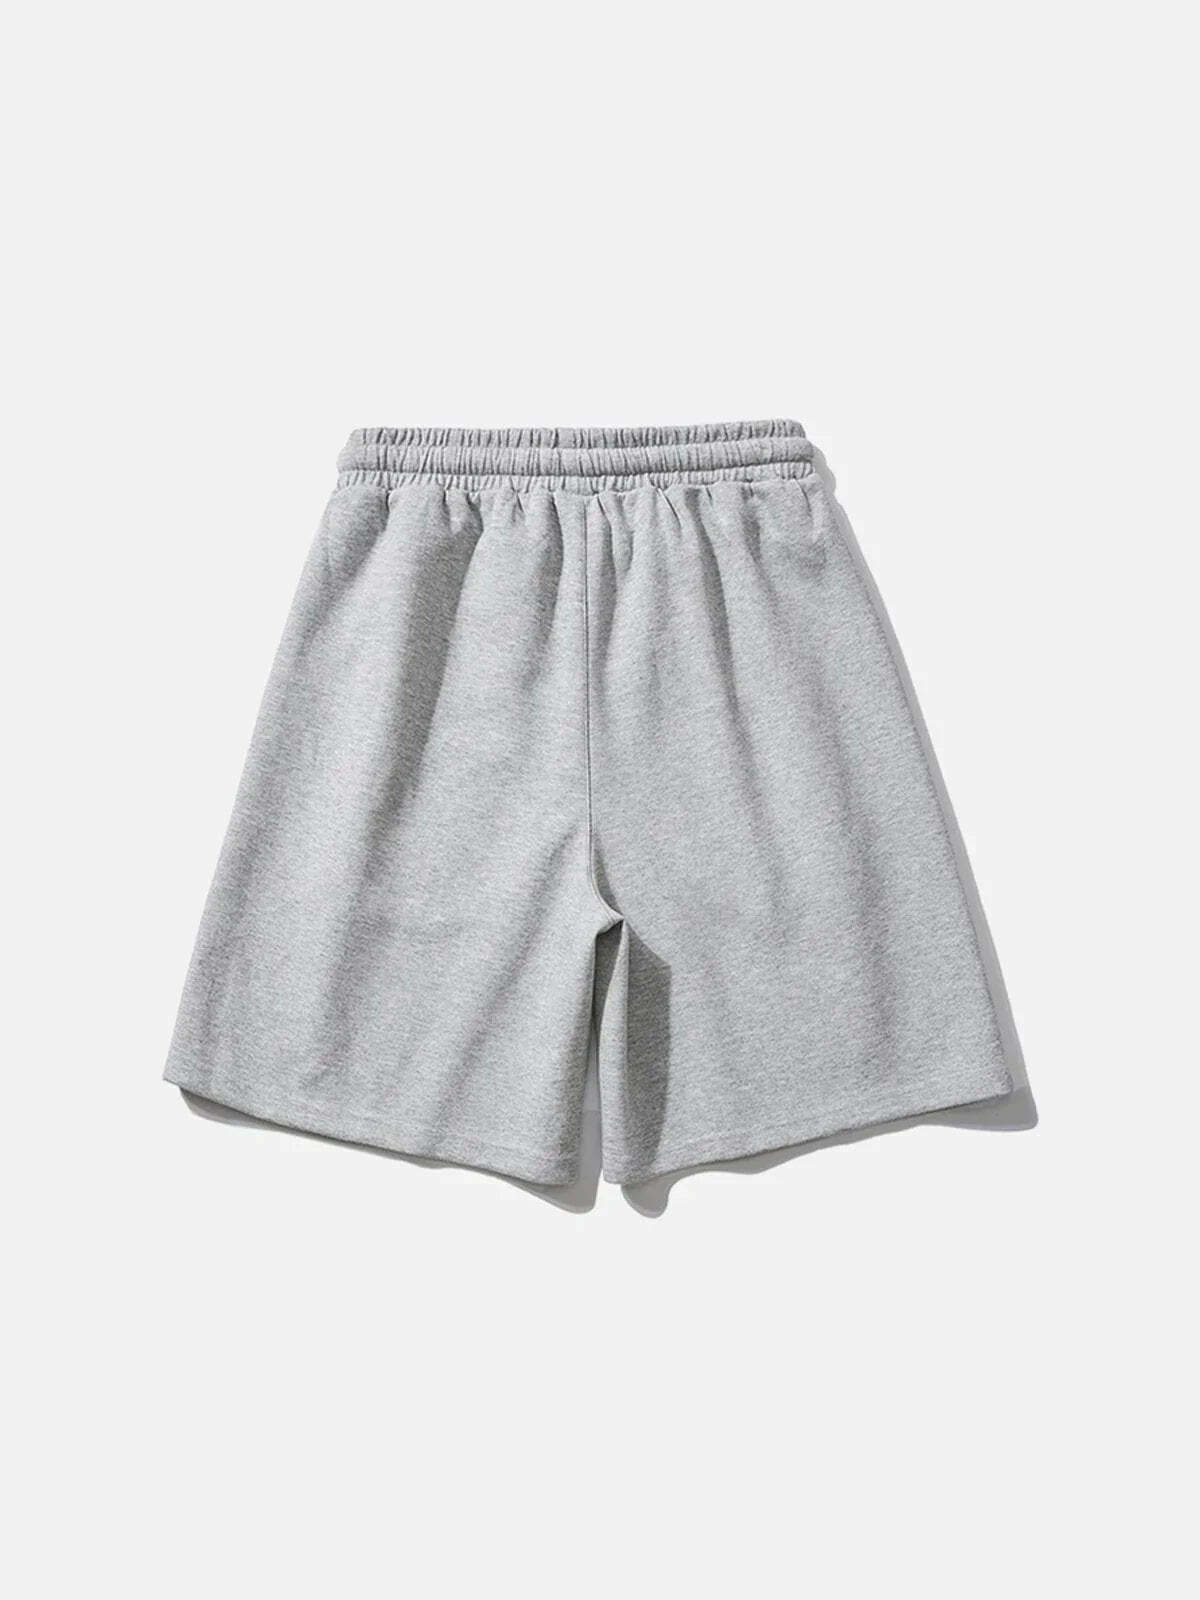 sleek drawstring shorts urban style essential 4189